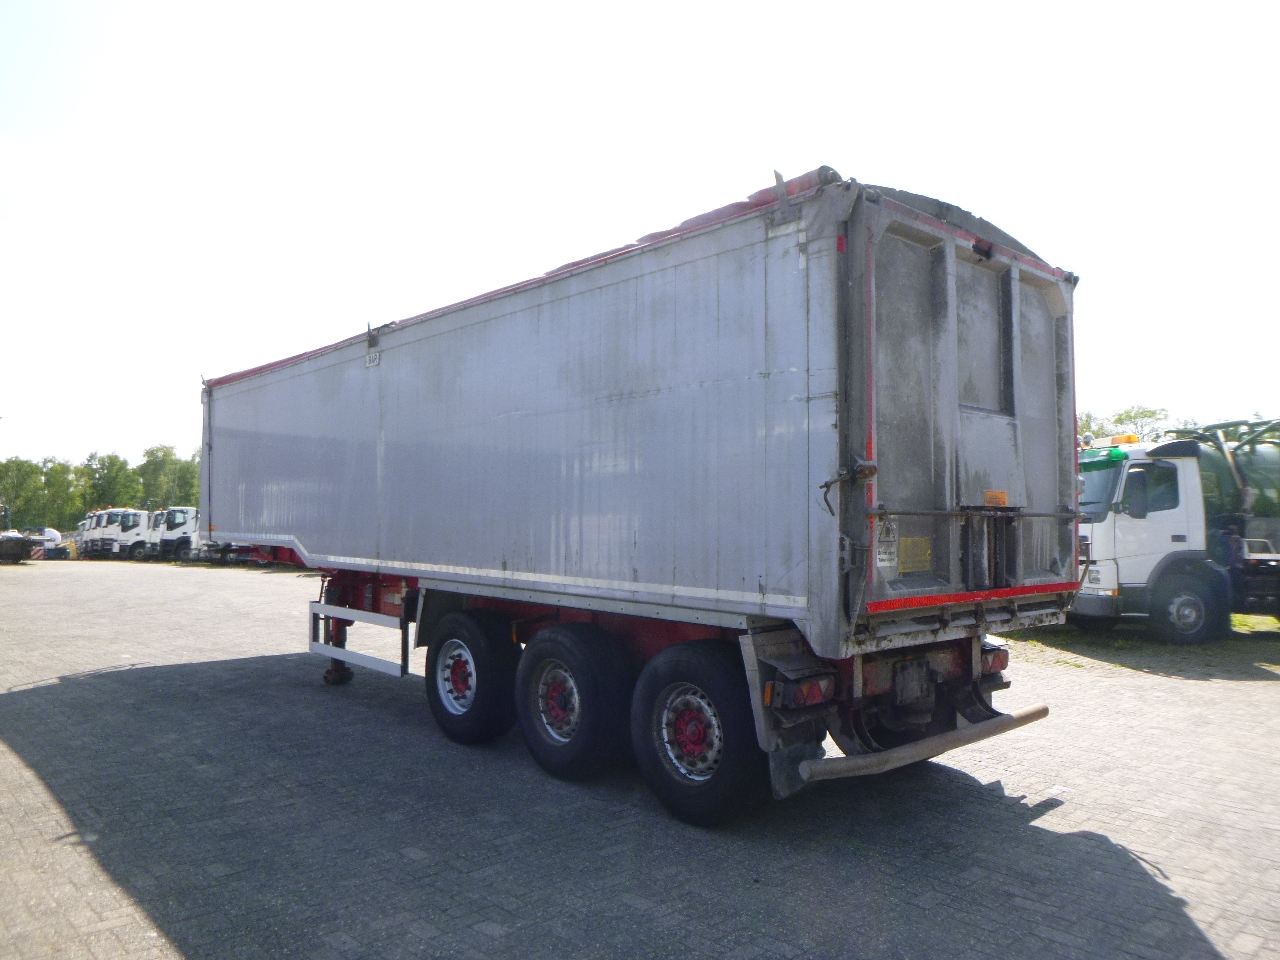 Semirremolque volquete Wilcox Tipper trailer alu 55 m3 + tarpaulin: foto 3